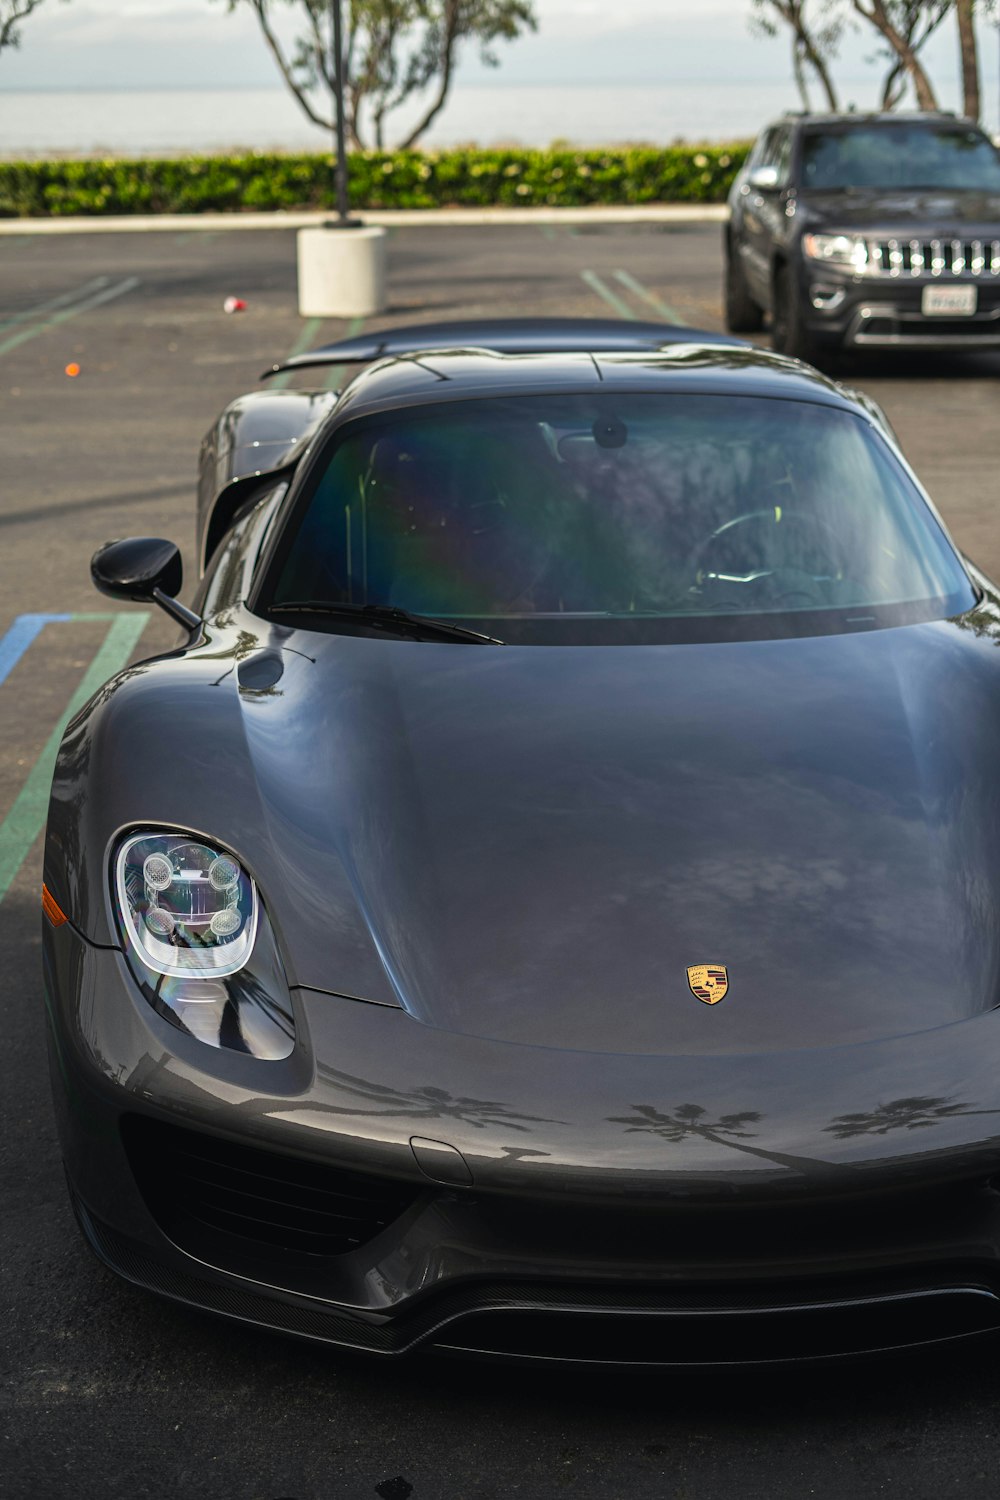 Black Porsche 911 Parked On Parking Lot During Daytime Photo Free Grey Image On Unsplash